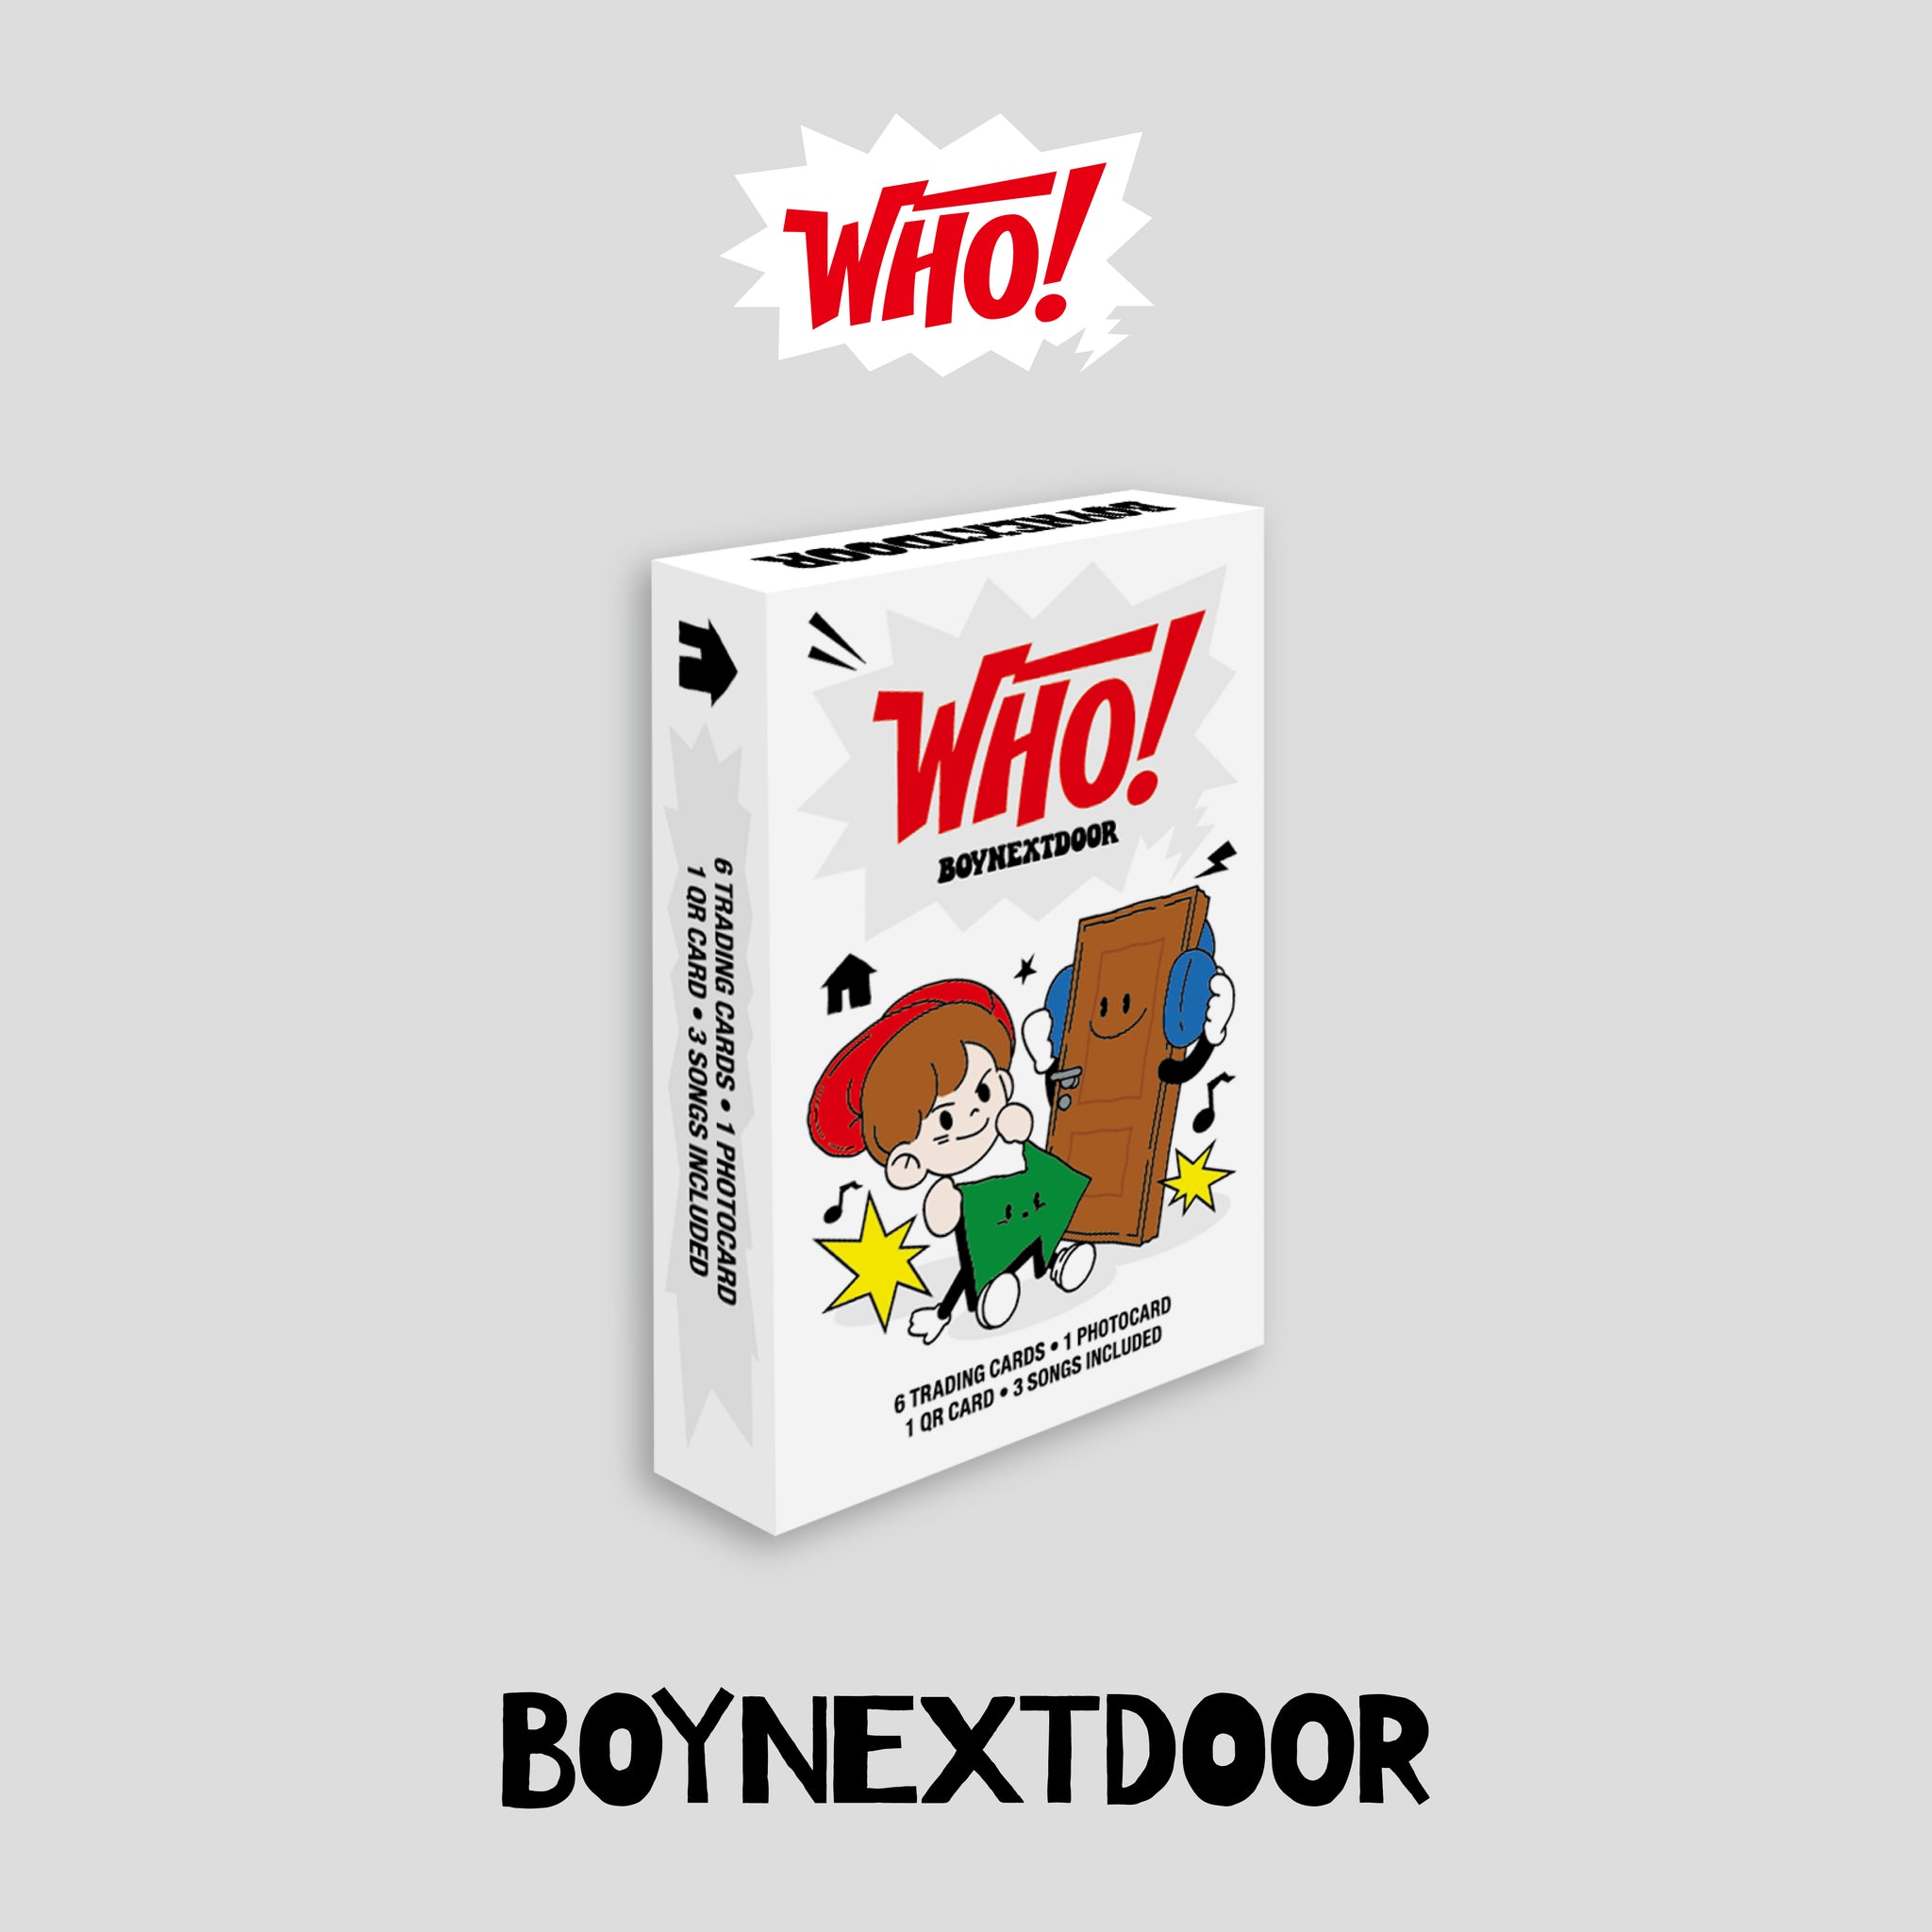 BOYNEXTDOOR – ‘WHO!’ (Weverse Albums ver.)